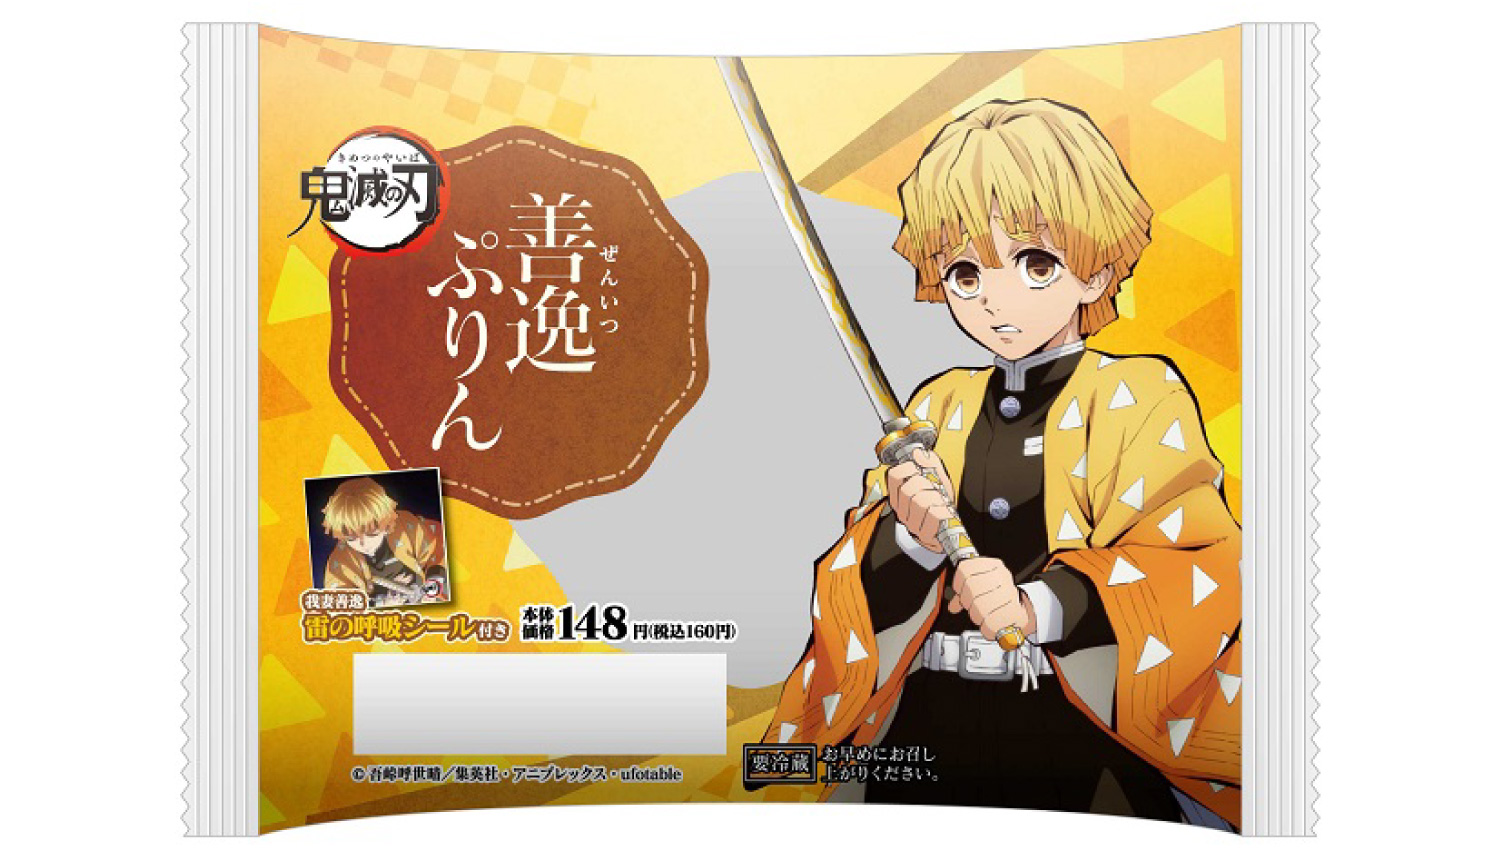 Demon Slayer S Zenitsu Gets His Own Japanese Custard Pudding At Lawson Convenience Stores Moshi Moshi Nippon もしもしにっぽん